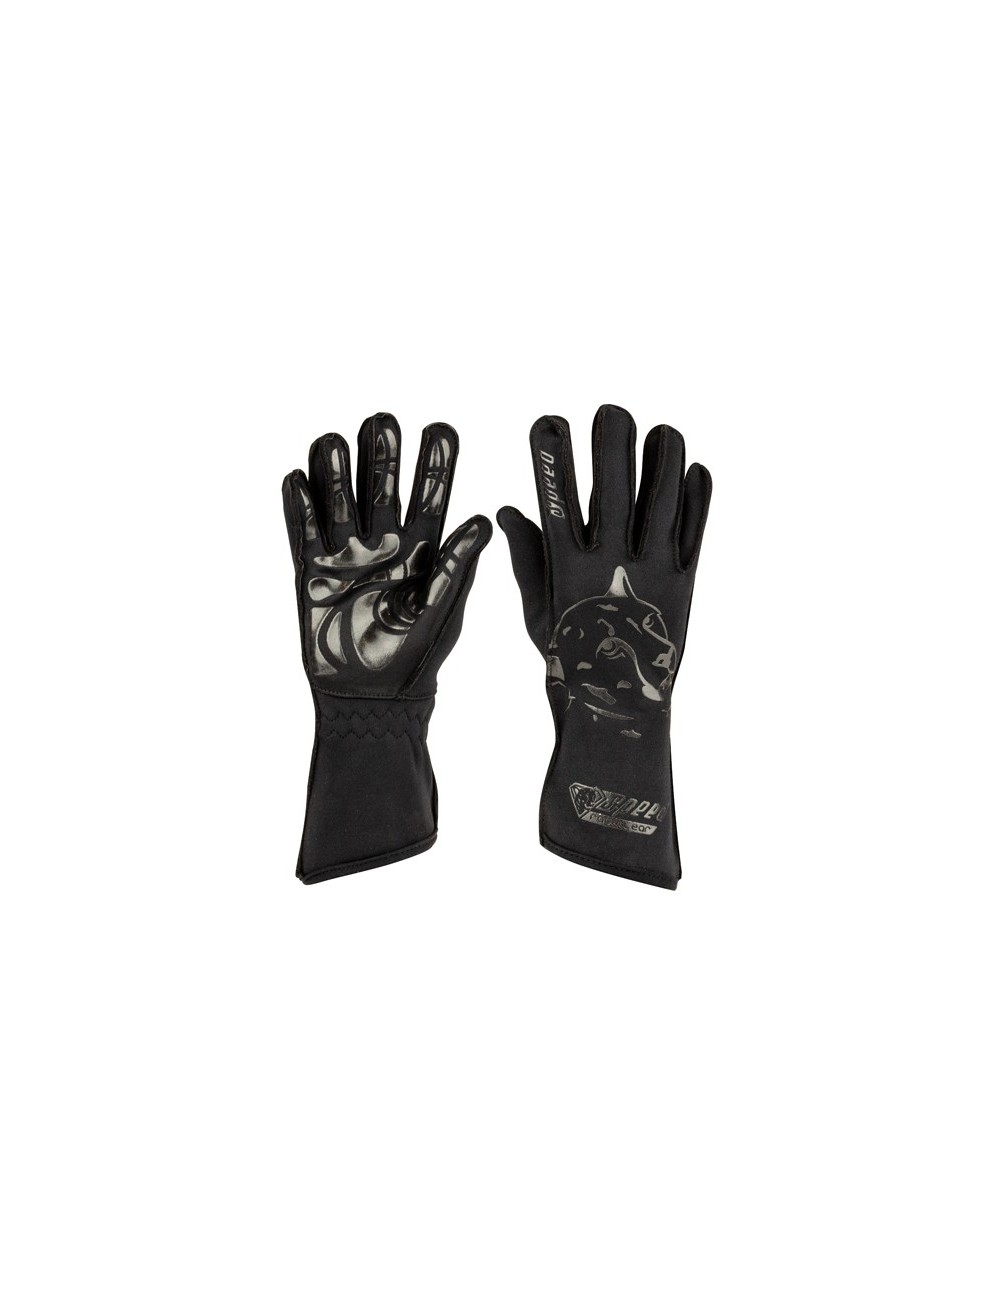 Speed gants MELBOURNE G-2  noir